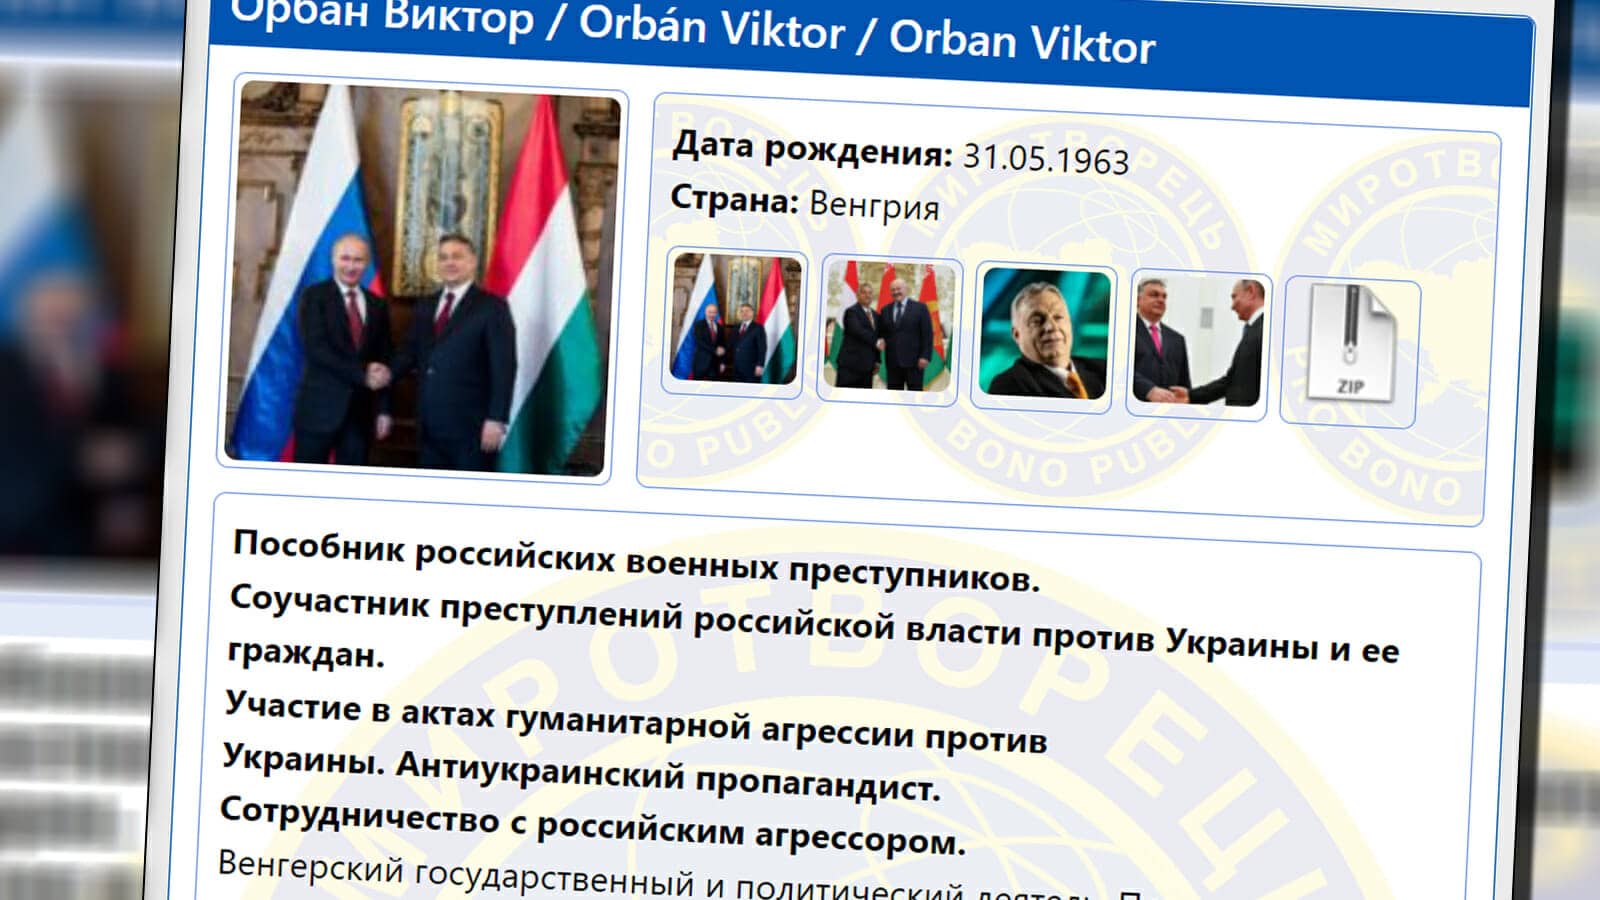 Viktor Orban auf ukrainischer „Feindesliste“